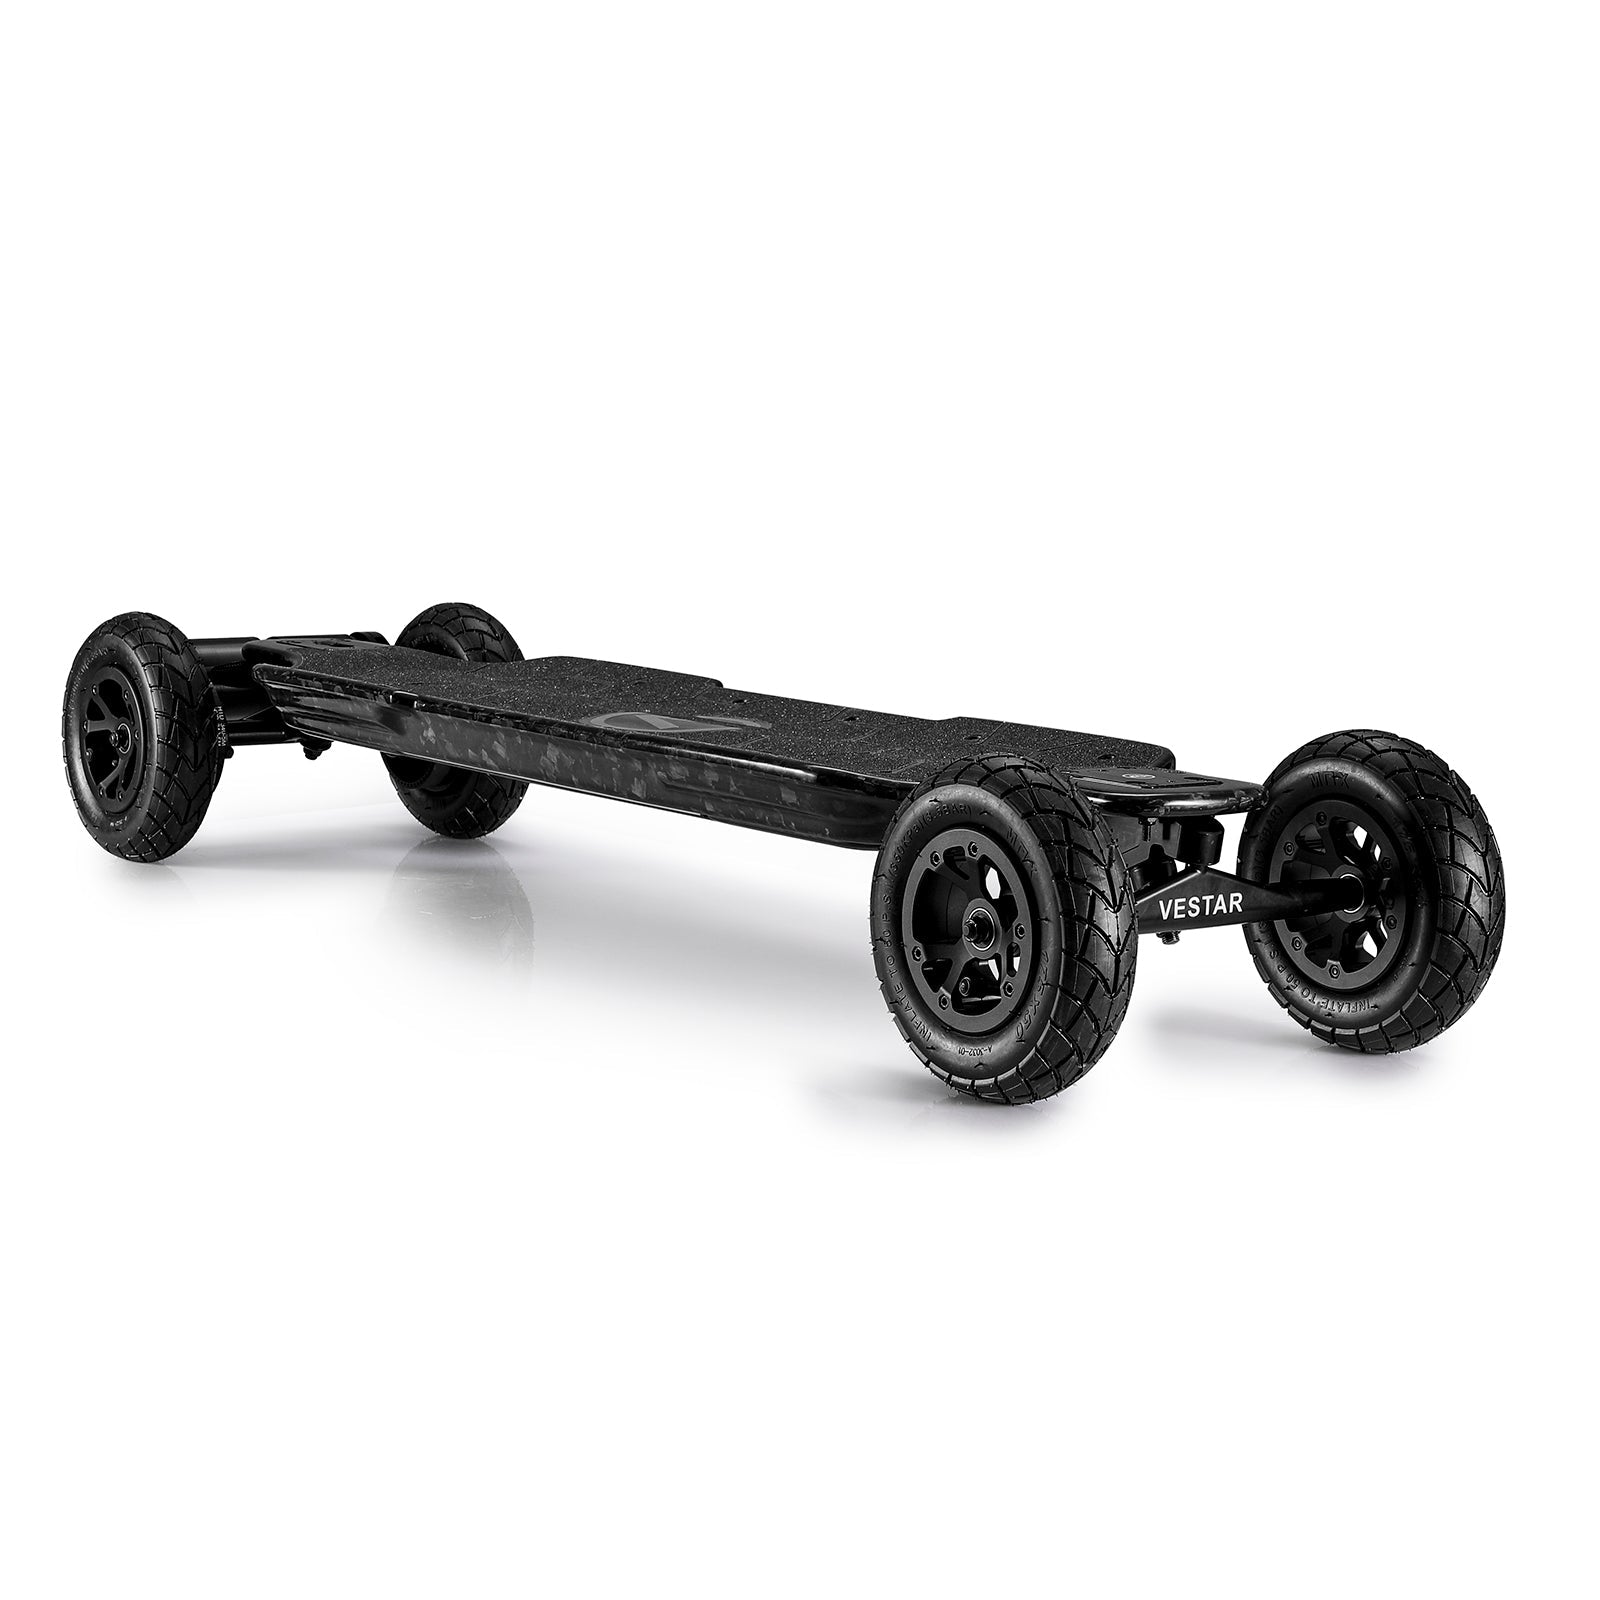 Osprey Carbon Parts & Accessories - Vestar Skateboards